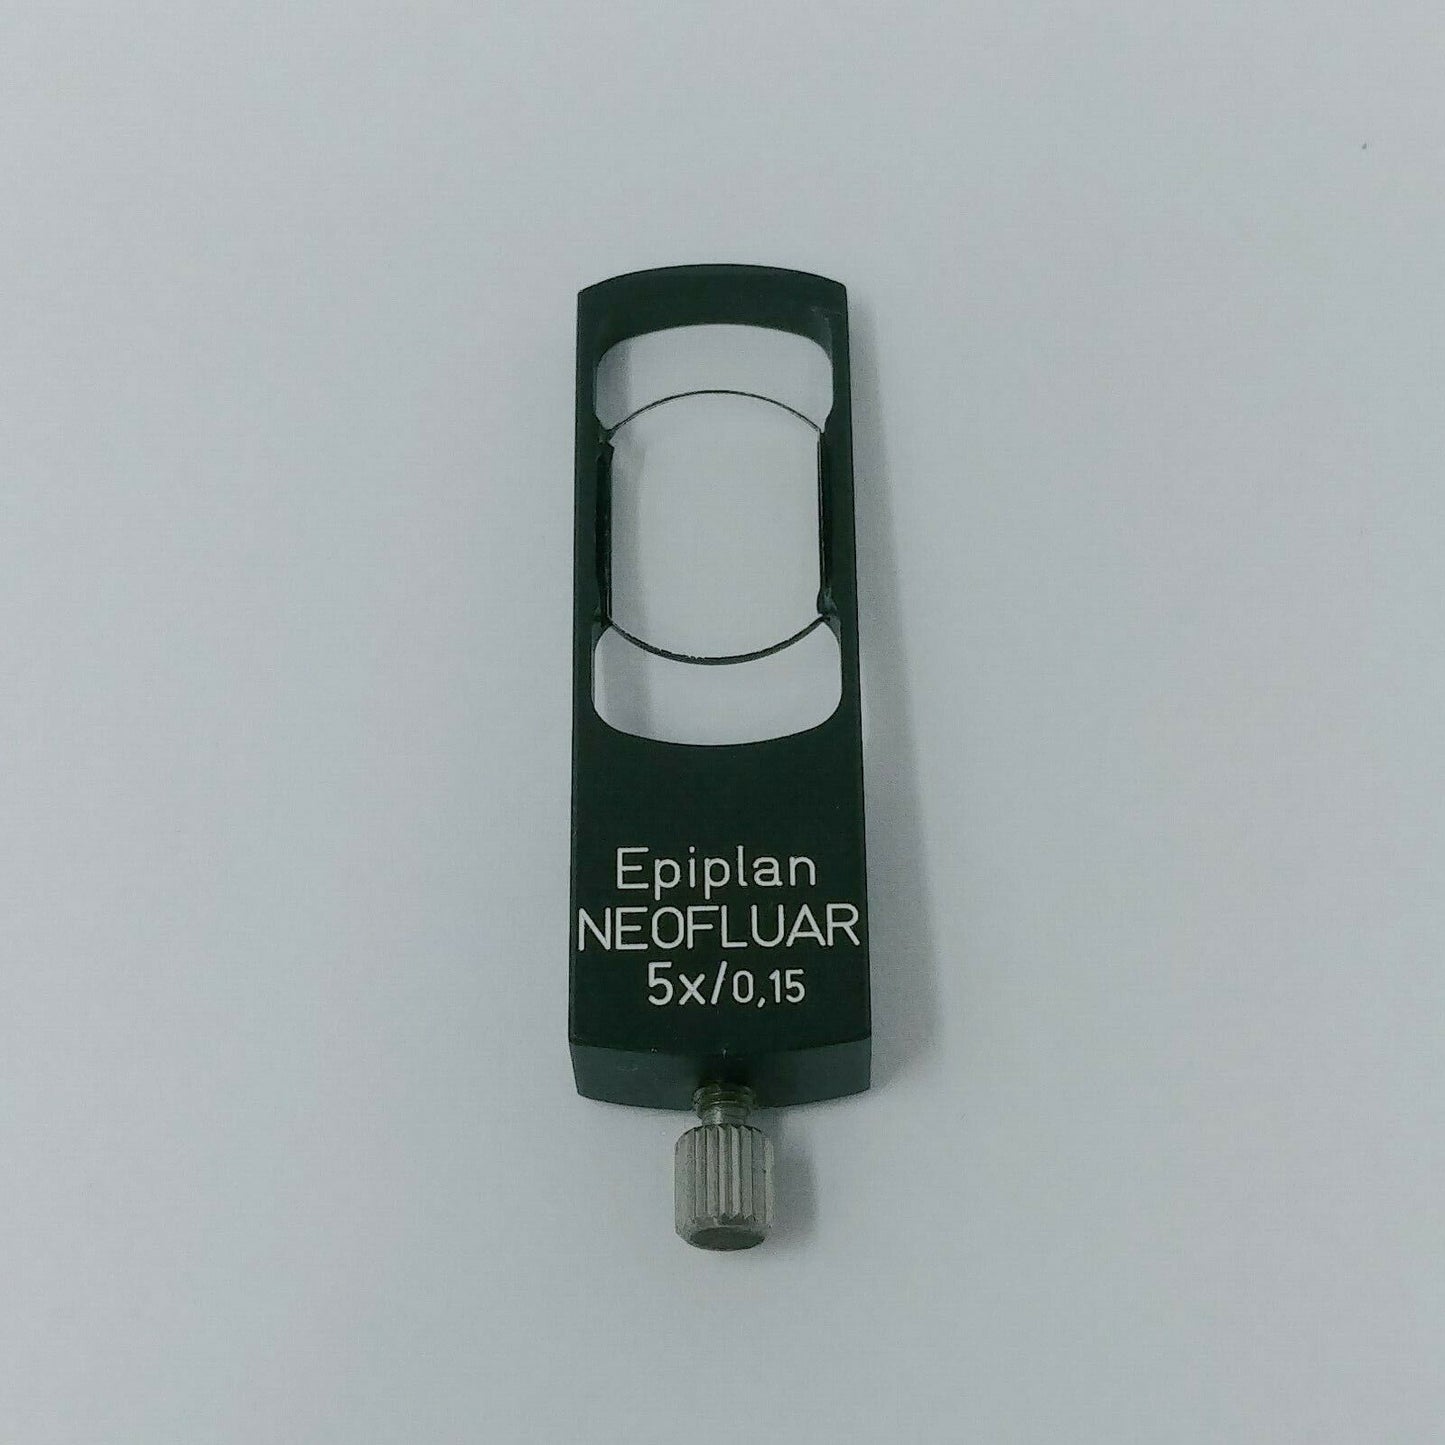 Zeiss Microscope DIC Prism Slider for Epiplan Neofluar 5x Objective 444422-9901 - microscopemarketplace